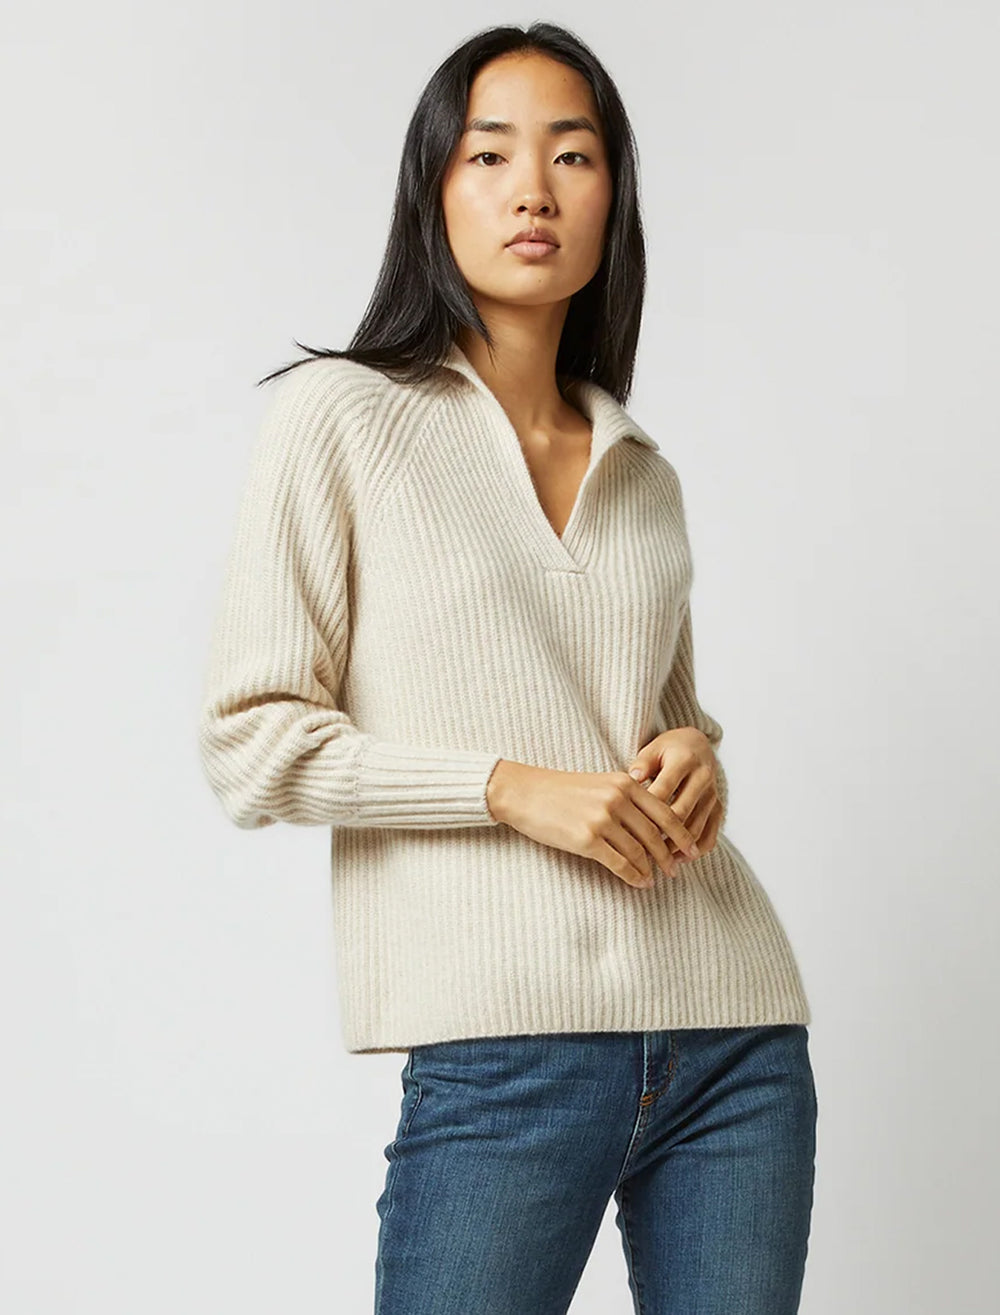 Model wearing Ann Mashburn's blair johnny collar sweater in heather wheat.